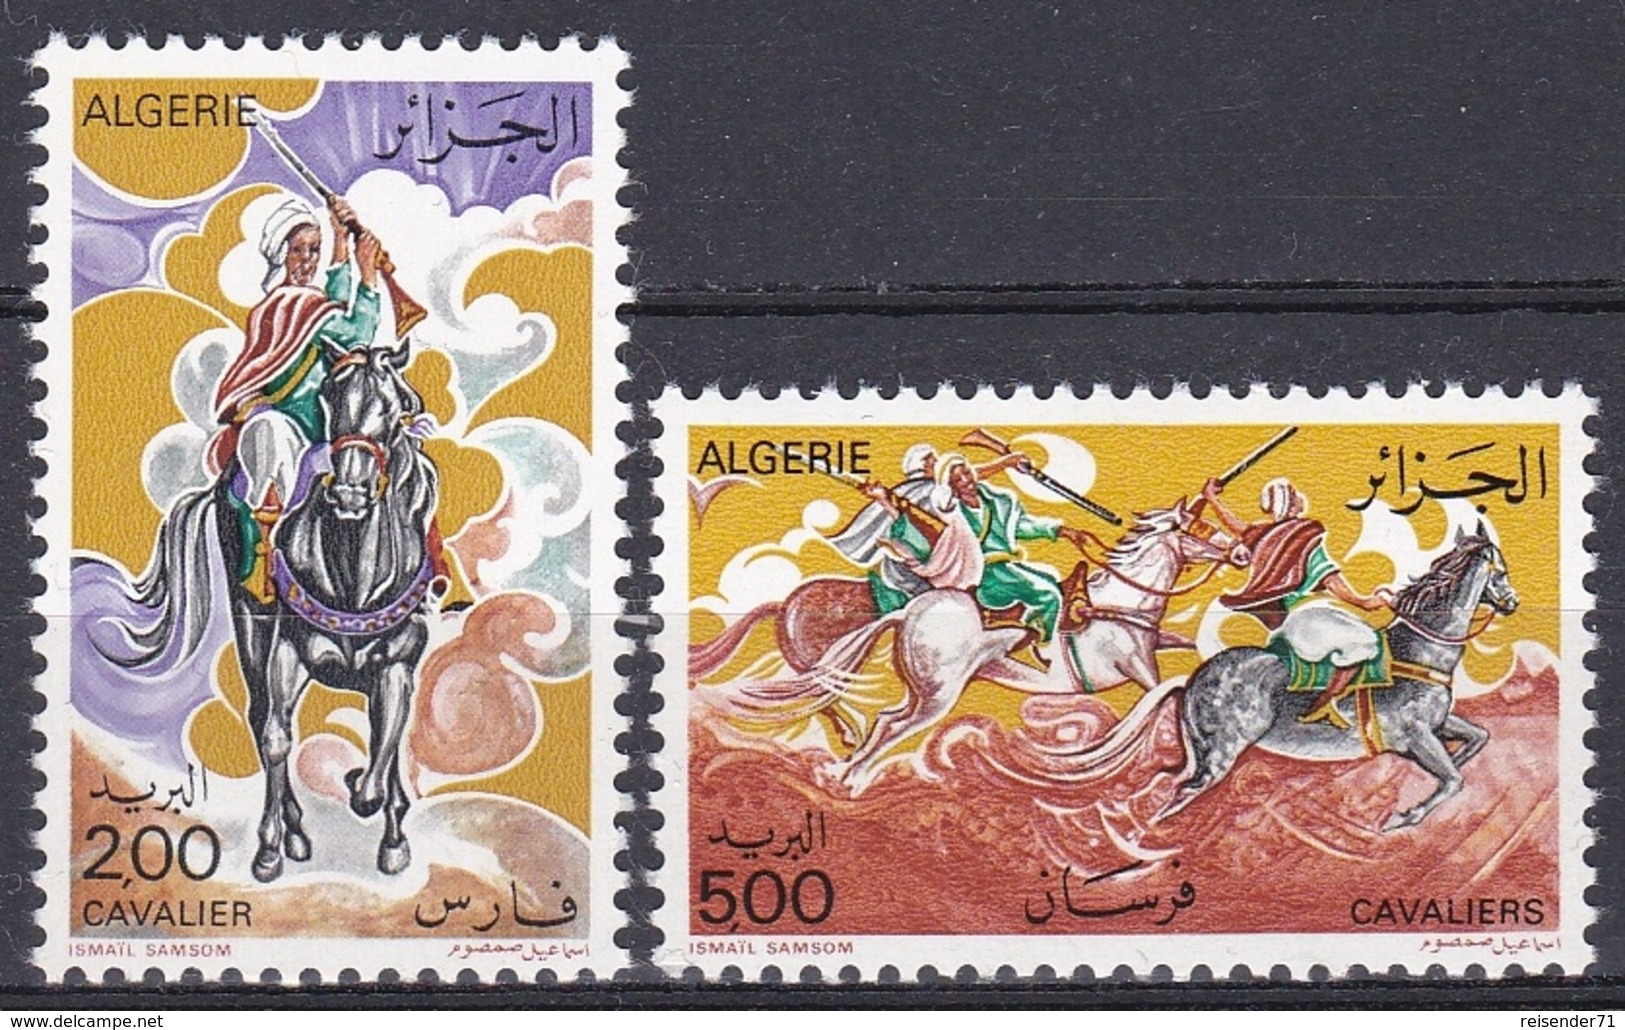 Algerien Algeria Algerie 1977 Militär Military Kavallerie Cavalry Reiter Trooper Pferde Horses Soldaten, Mi. 709-0 ** - Algeria (1962-...)